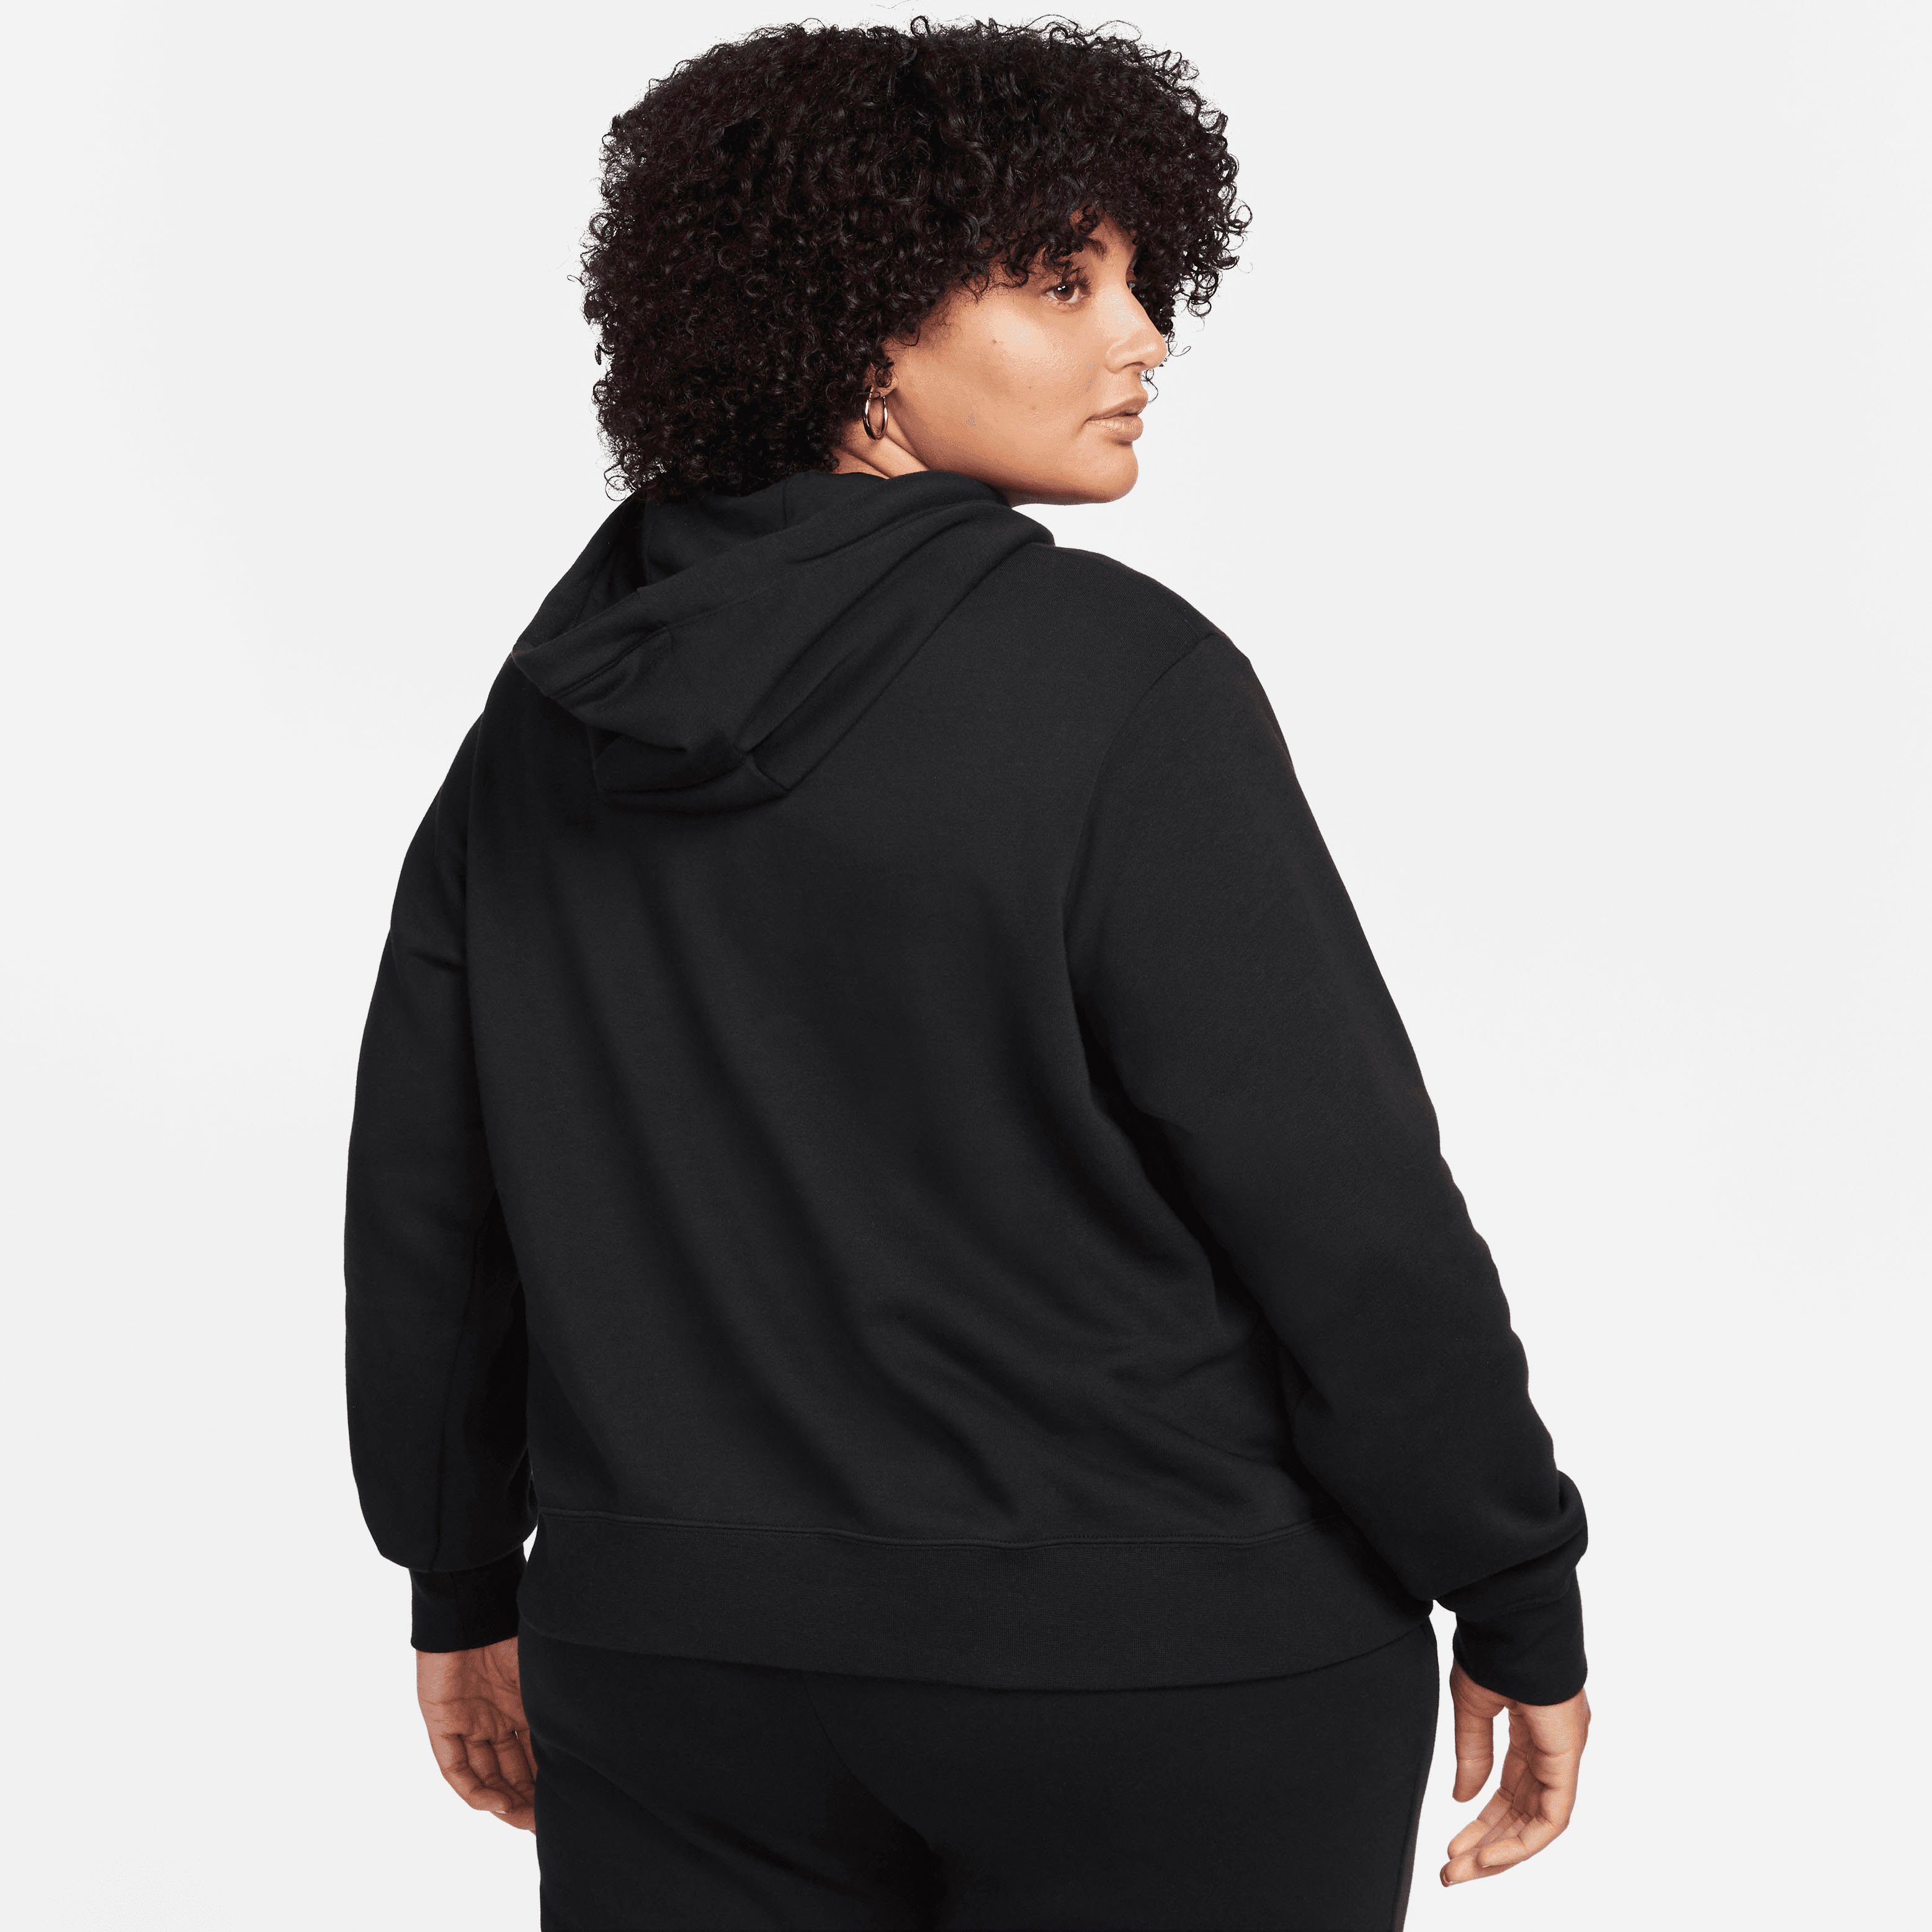 Pullover Club Hoodie (Plus Nike Fleece Size) BLACK/WHITE Women's Sportswear Kapuzensweatshirt